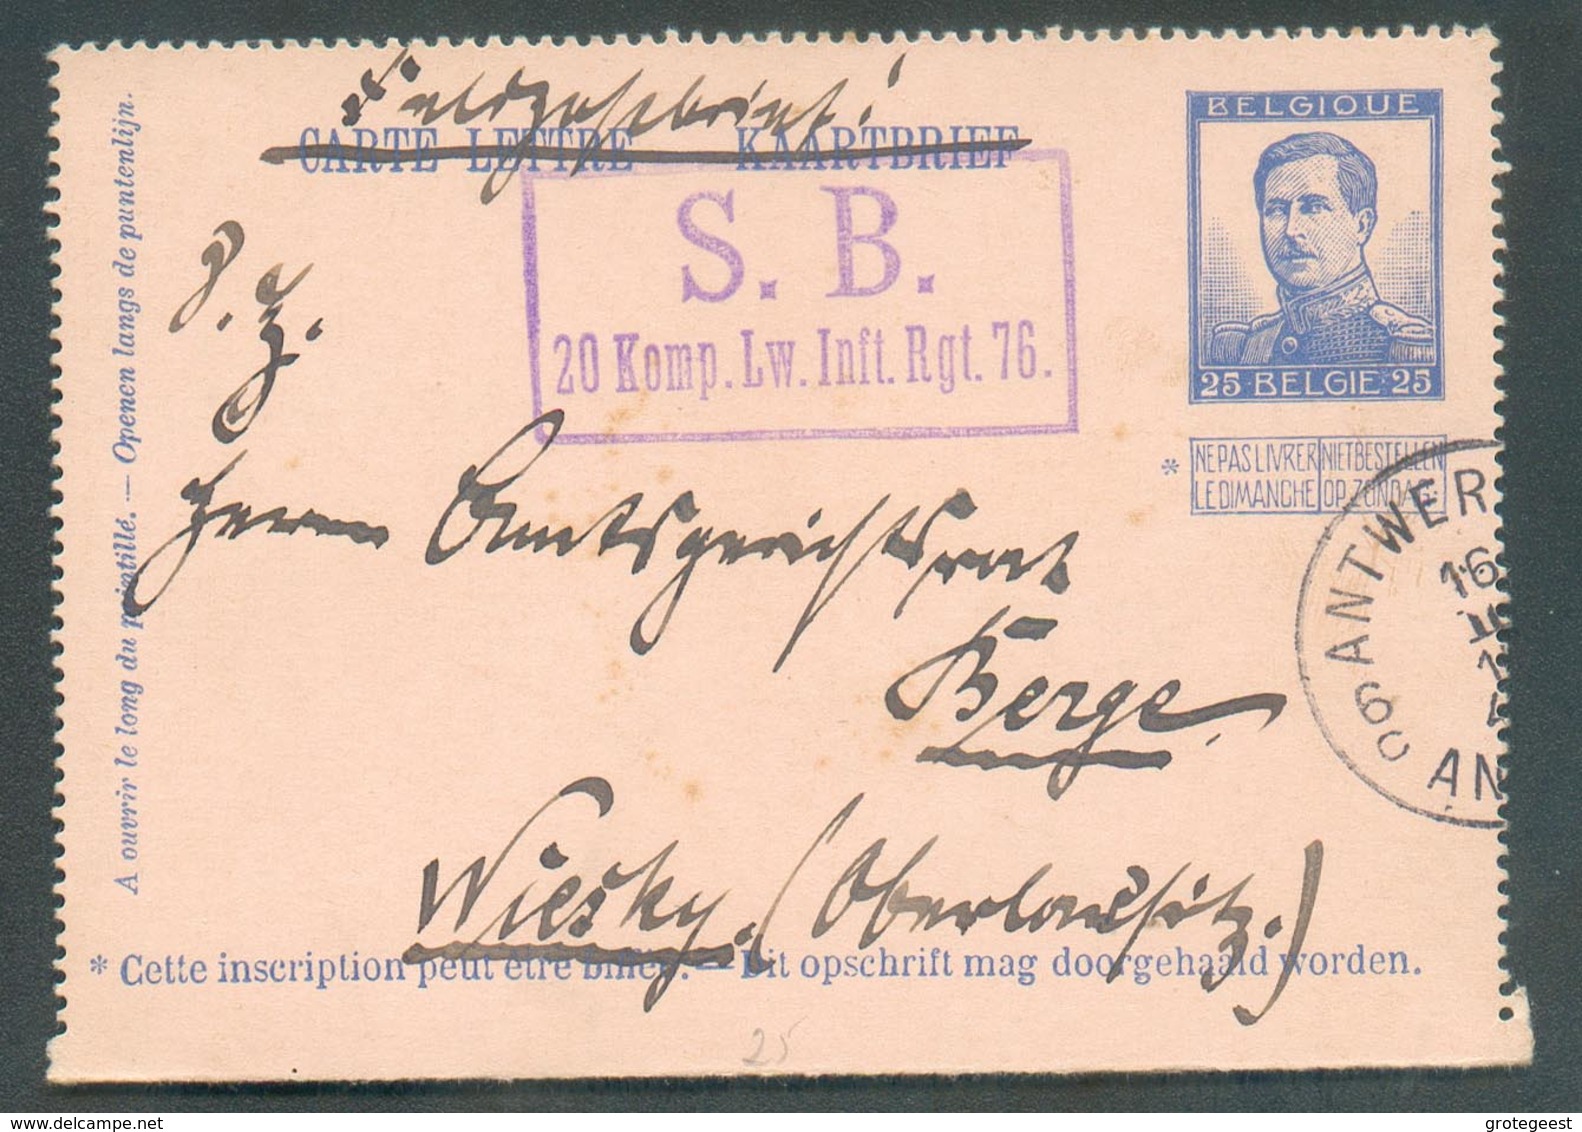 E.P. Carte-lettre 25c. Pellens Obl. Sc ANTWERPEN 6 Du 16-II-1915 En Feldpostbrief + Griffe Violette S.B. 20.Komp.Lw.Infl - Kartenbriefe